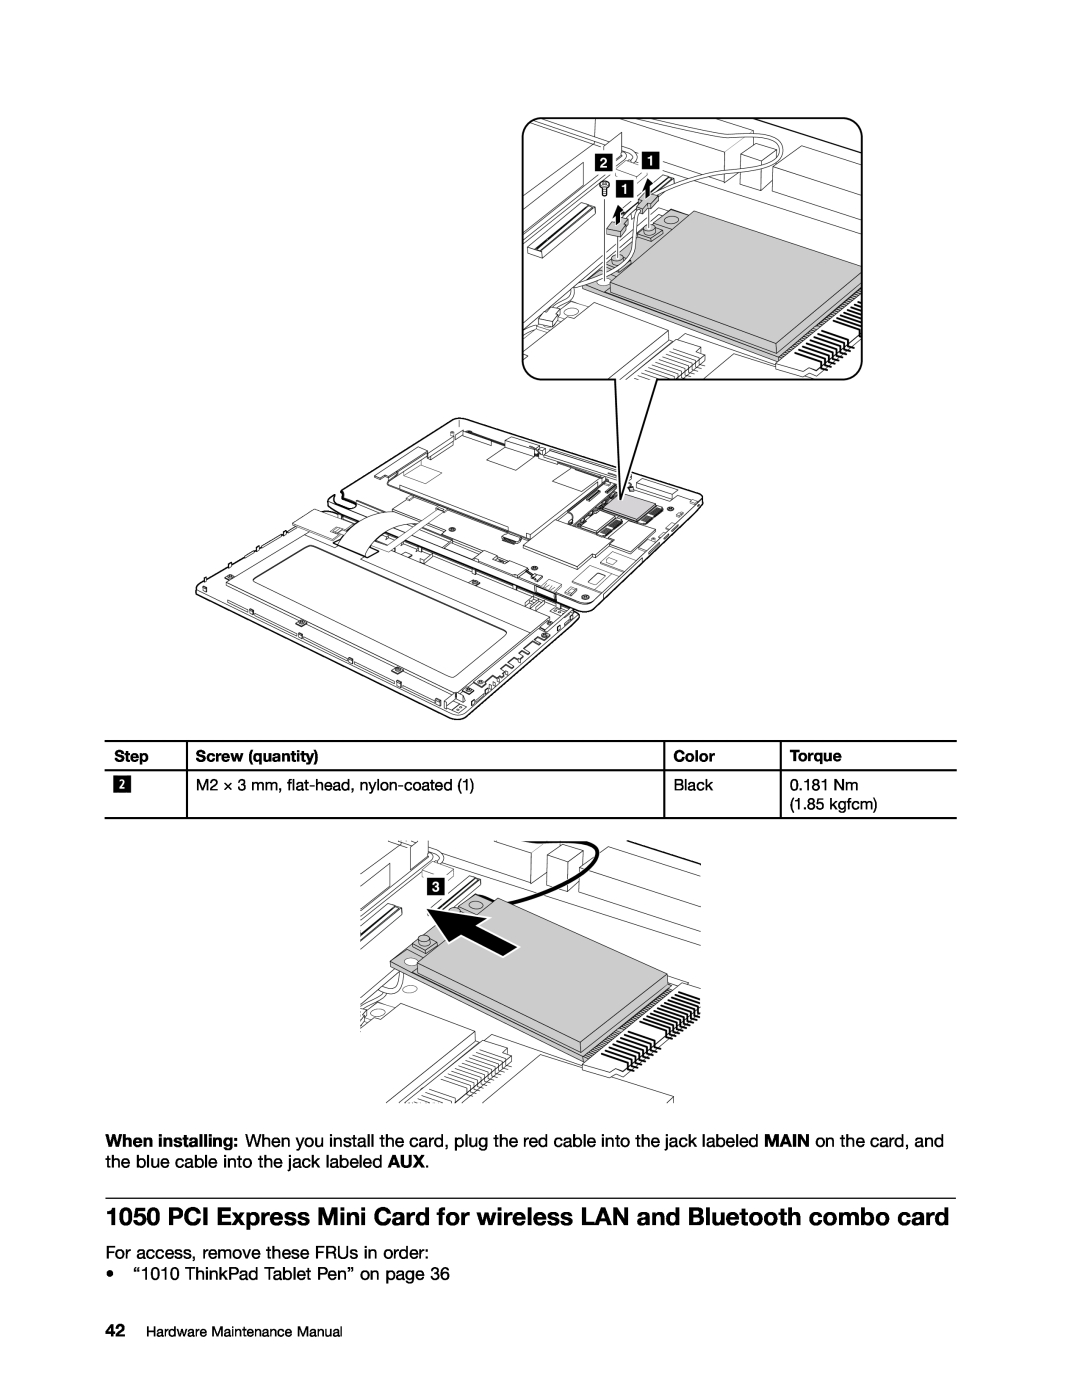 Lenovo 183825U manual PCI Express Mini Card for wireless LAN and Bluetooth combo card, kgfcm, Hardware Maintenance Manual 